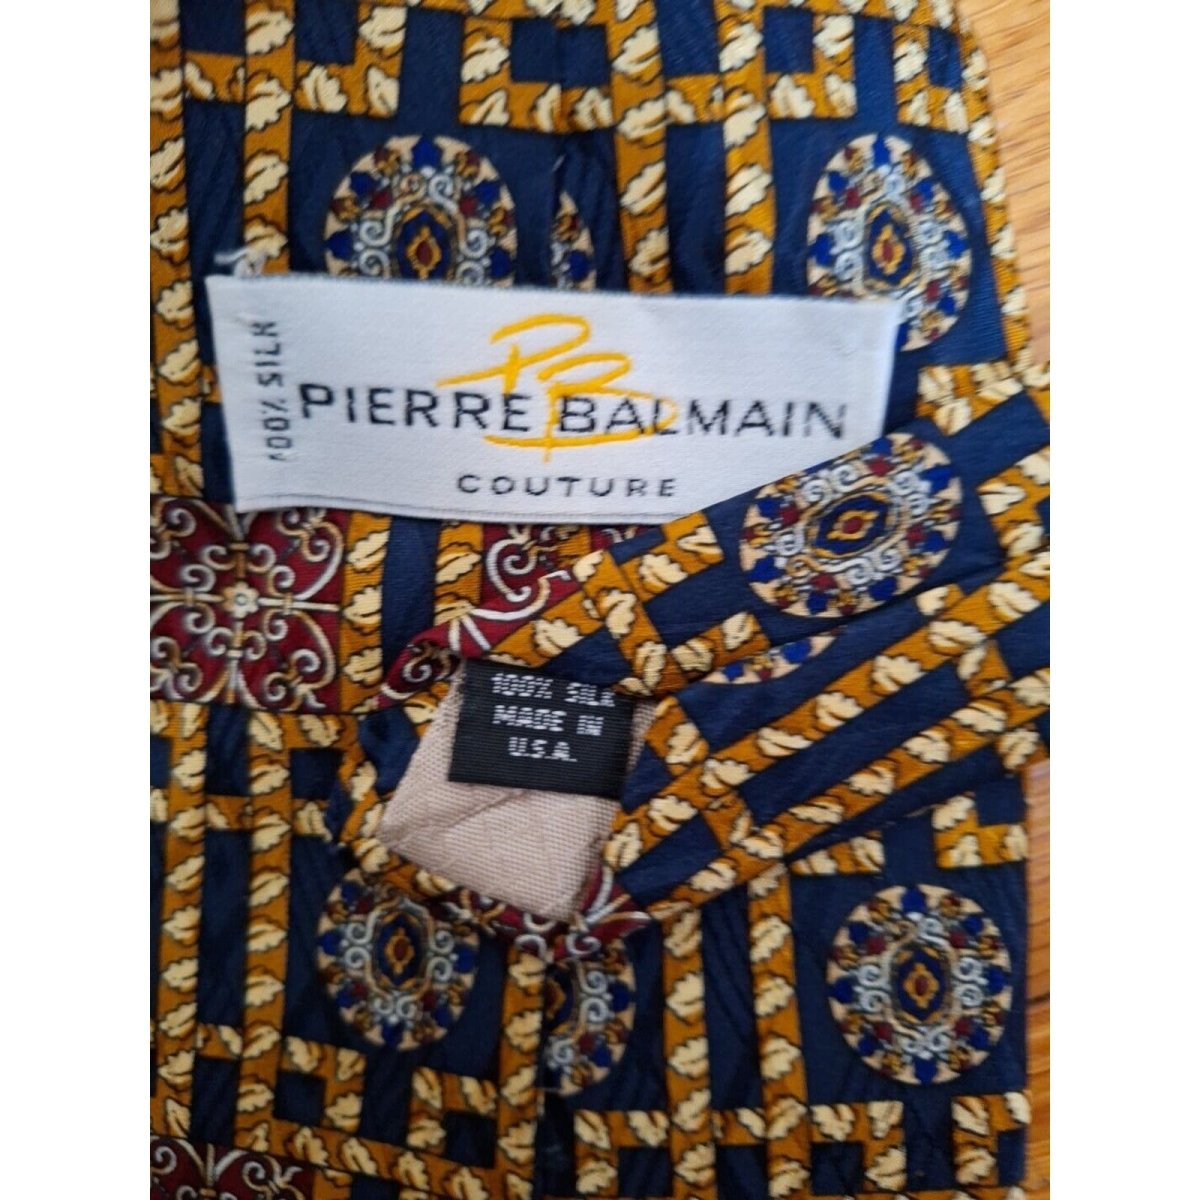 Vintage Pierre Balmain Couture Silk Tie - One Size - themallvintage The Mall Vintage